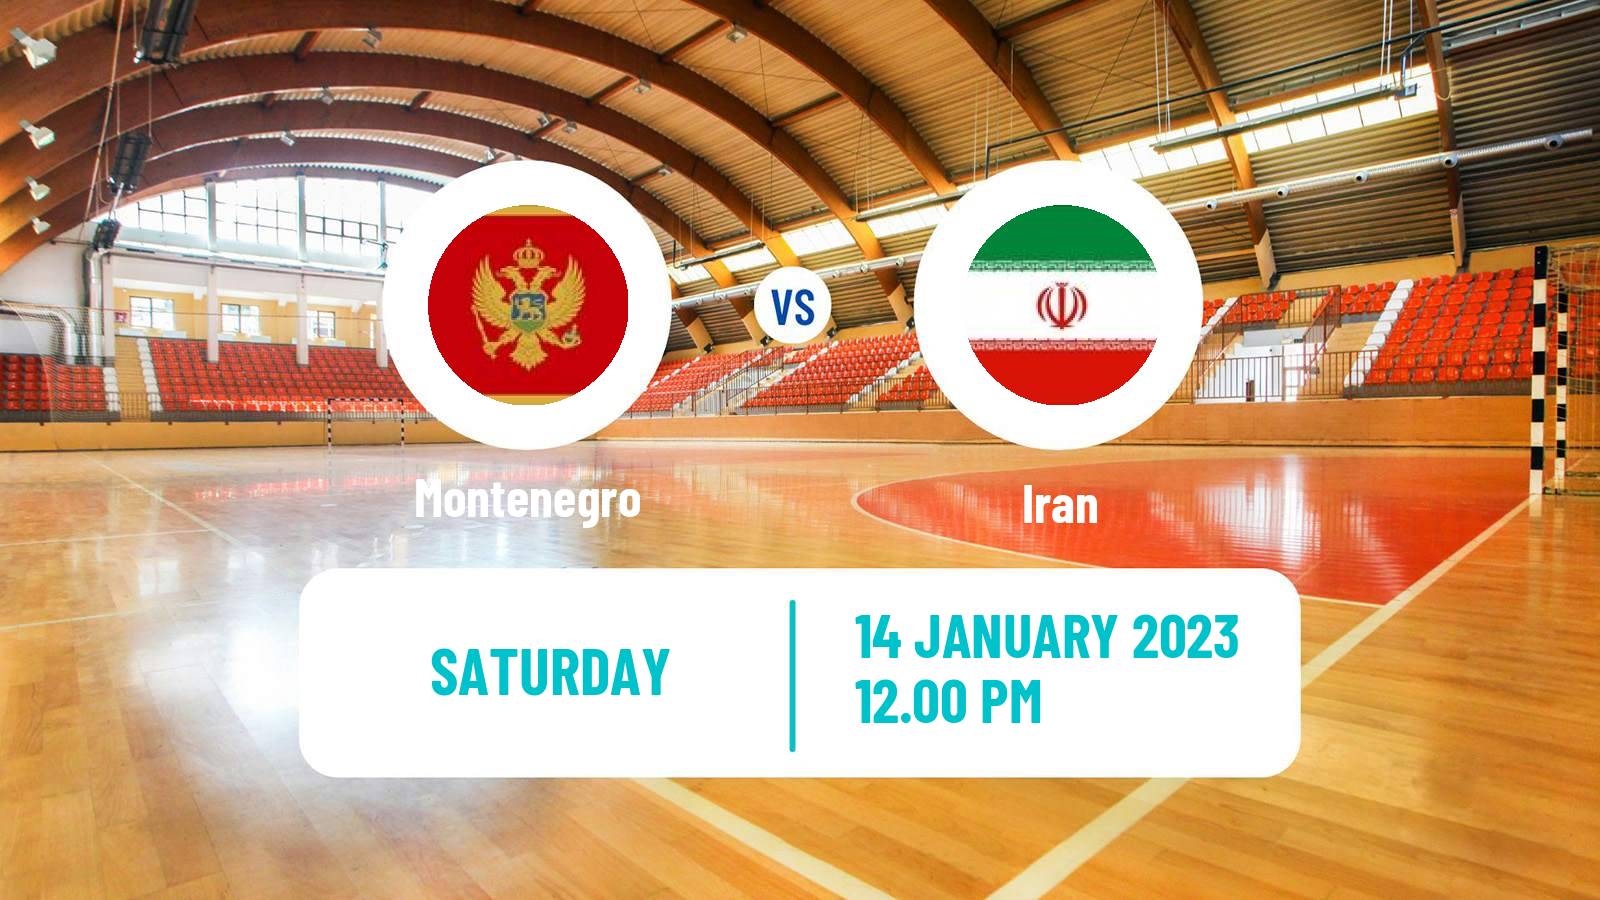 Handball Handball World Championship Montenegro - Iran